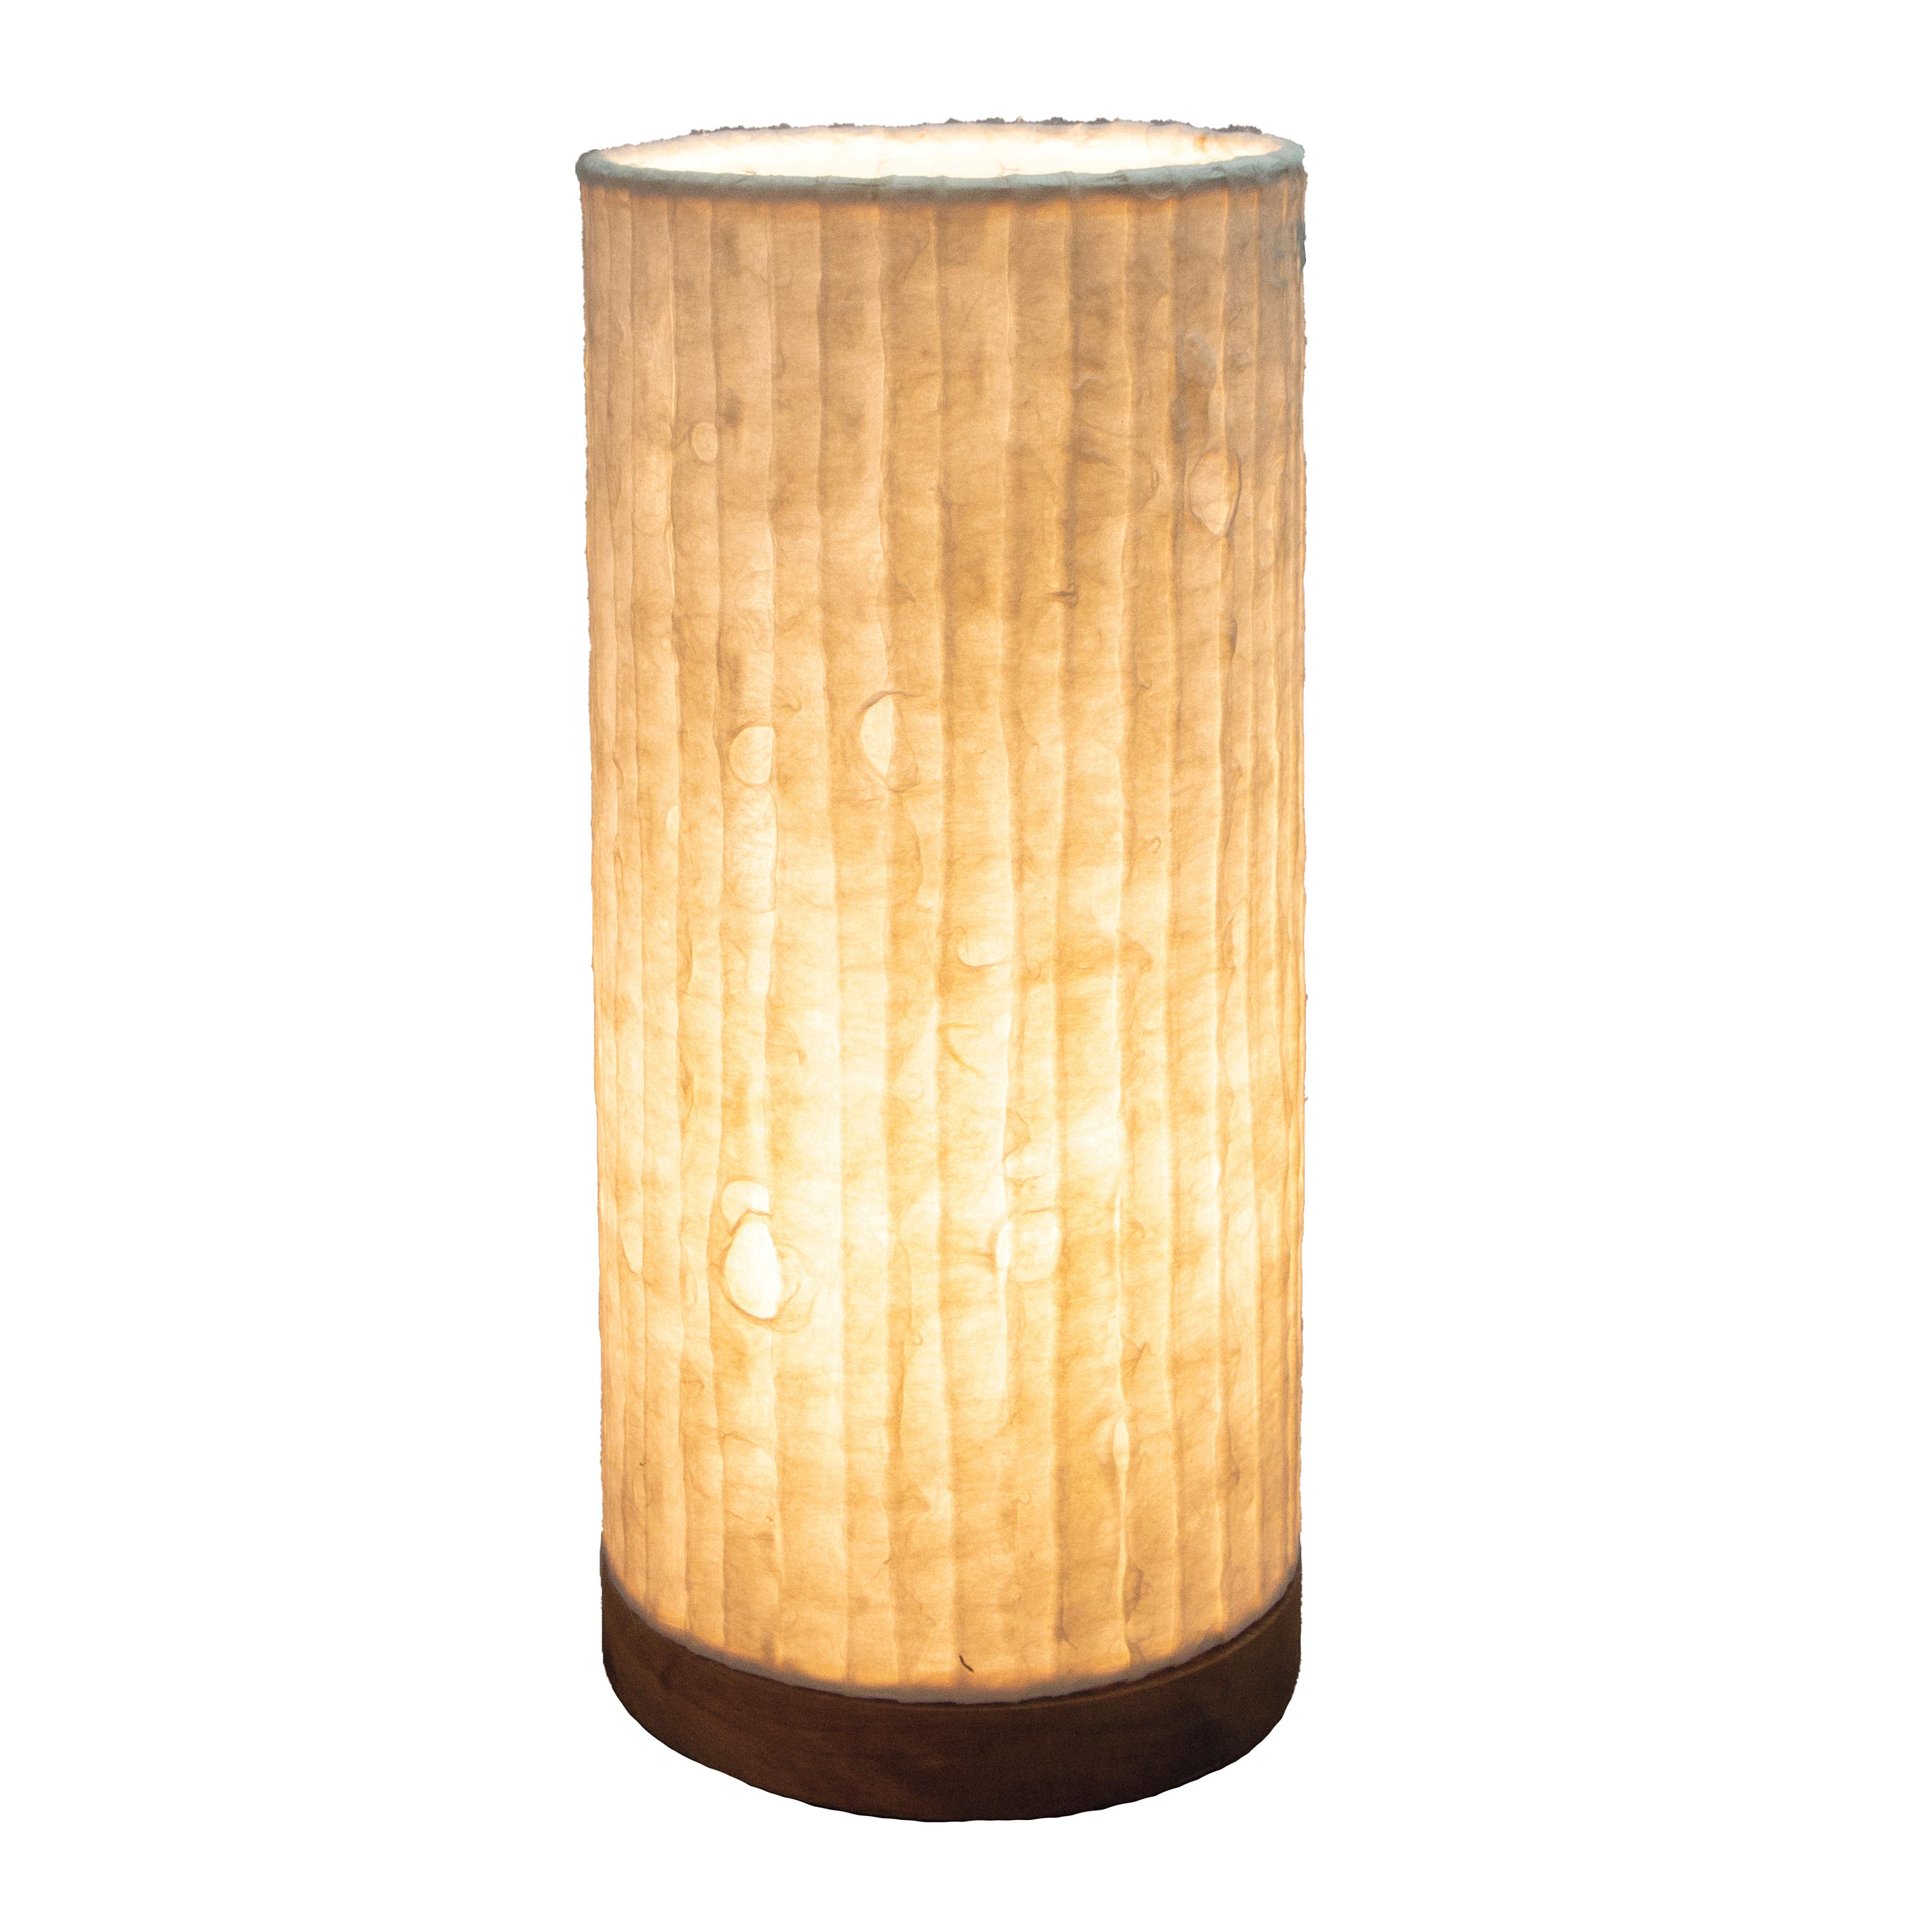 Recycled Paper Lamp on Mango Wood Base swatch image